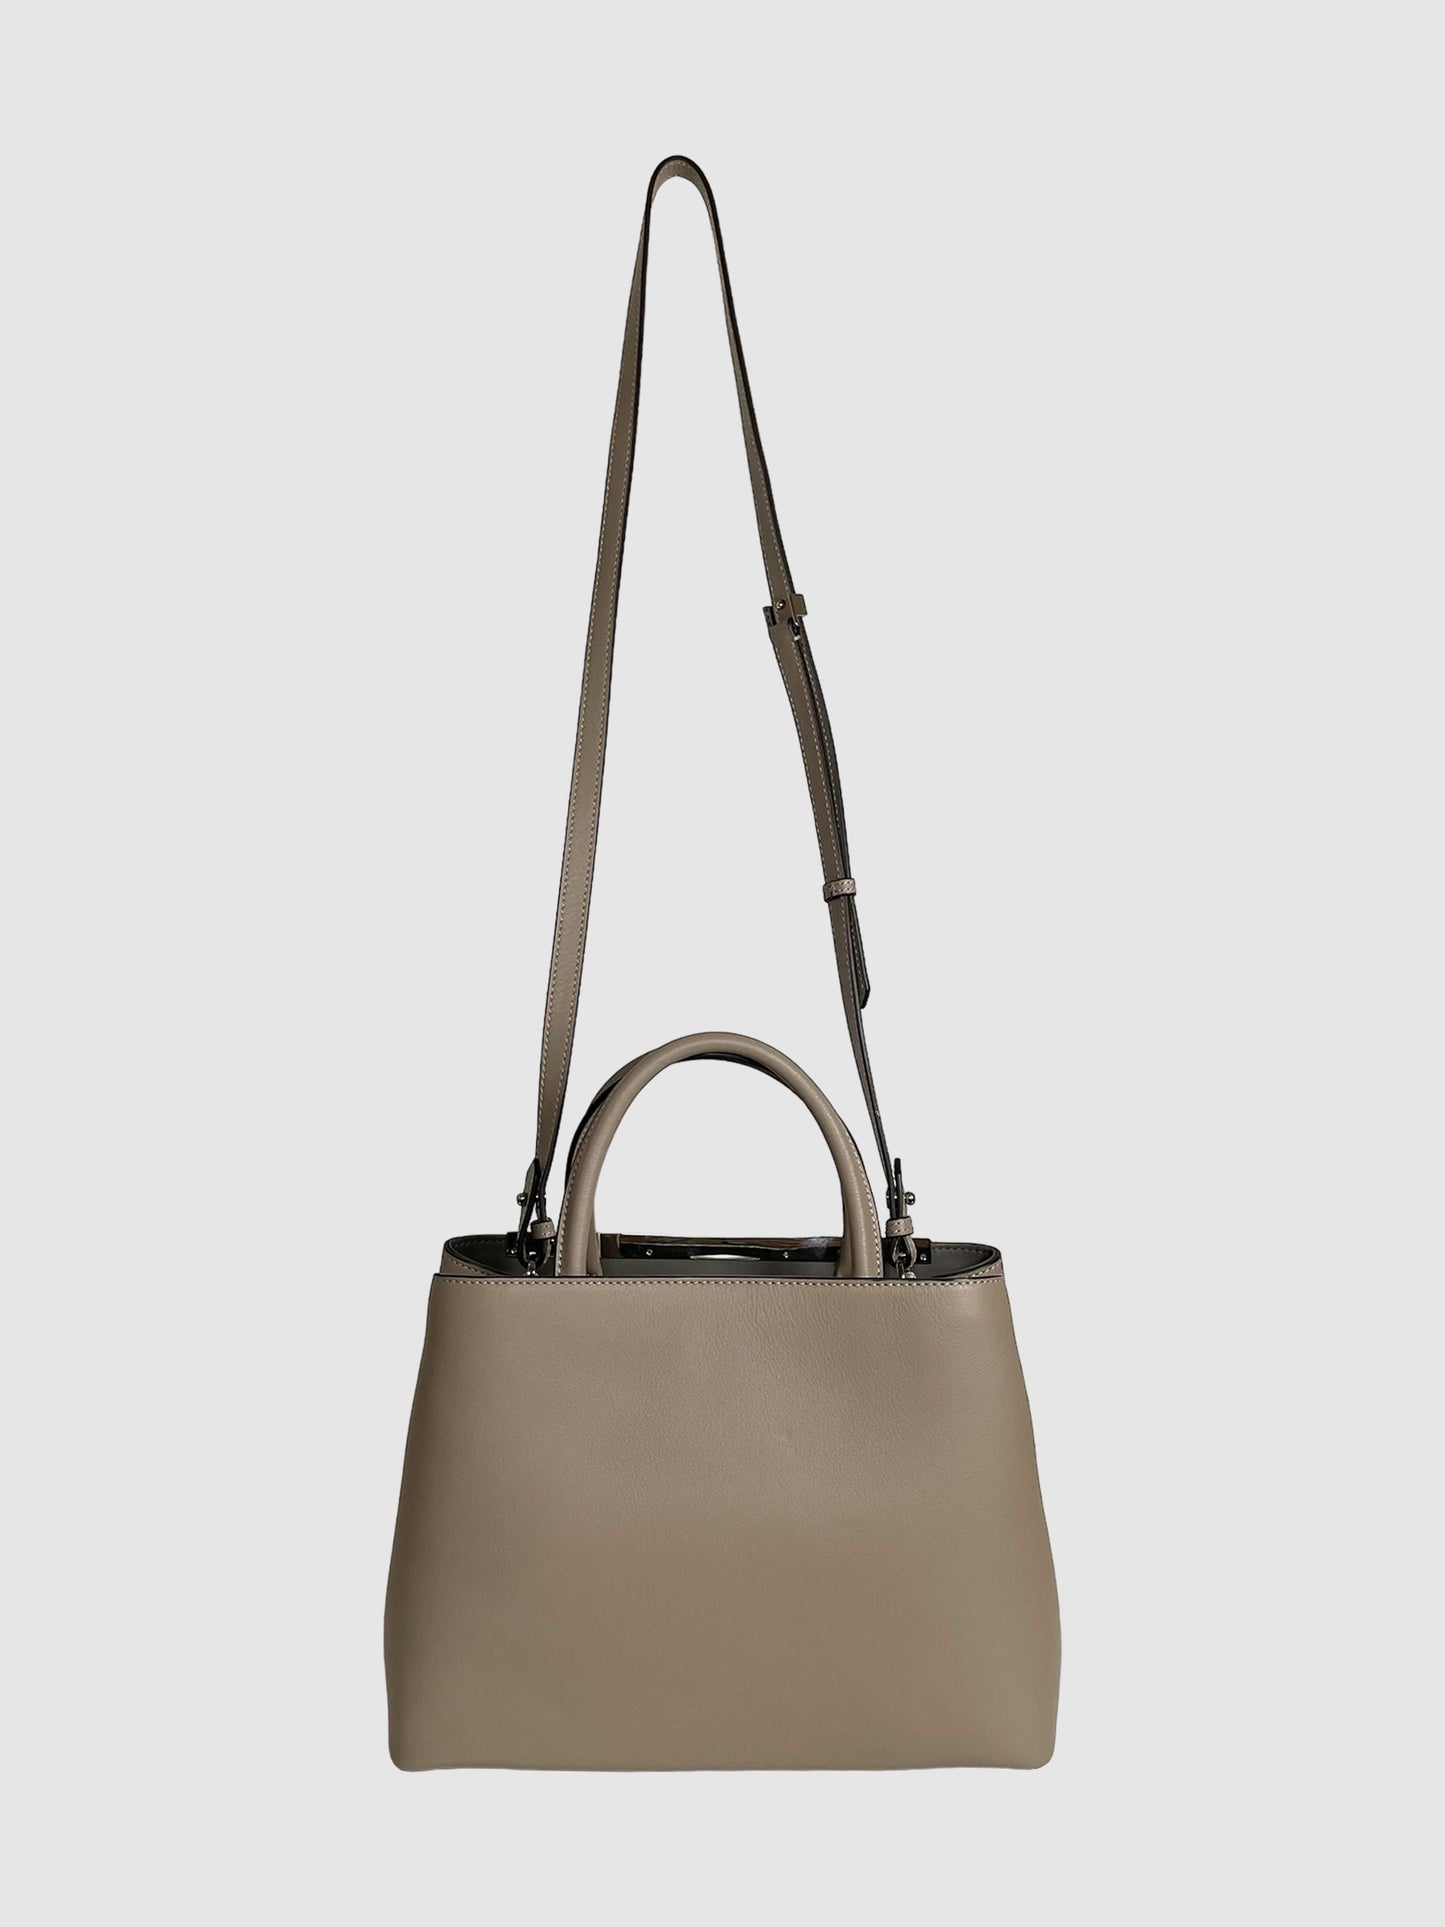 Fendi 2Jours Leather Handbag